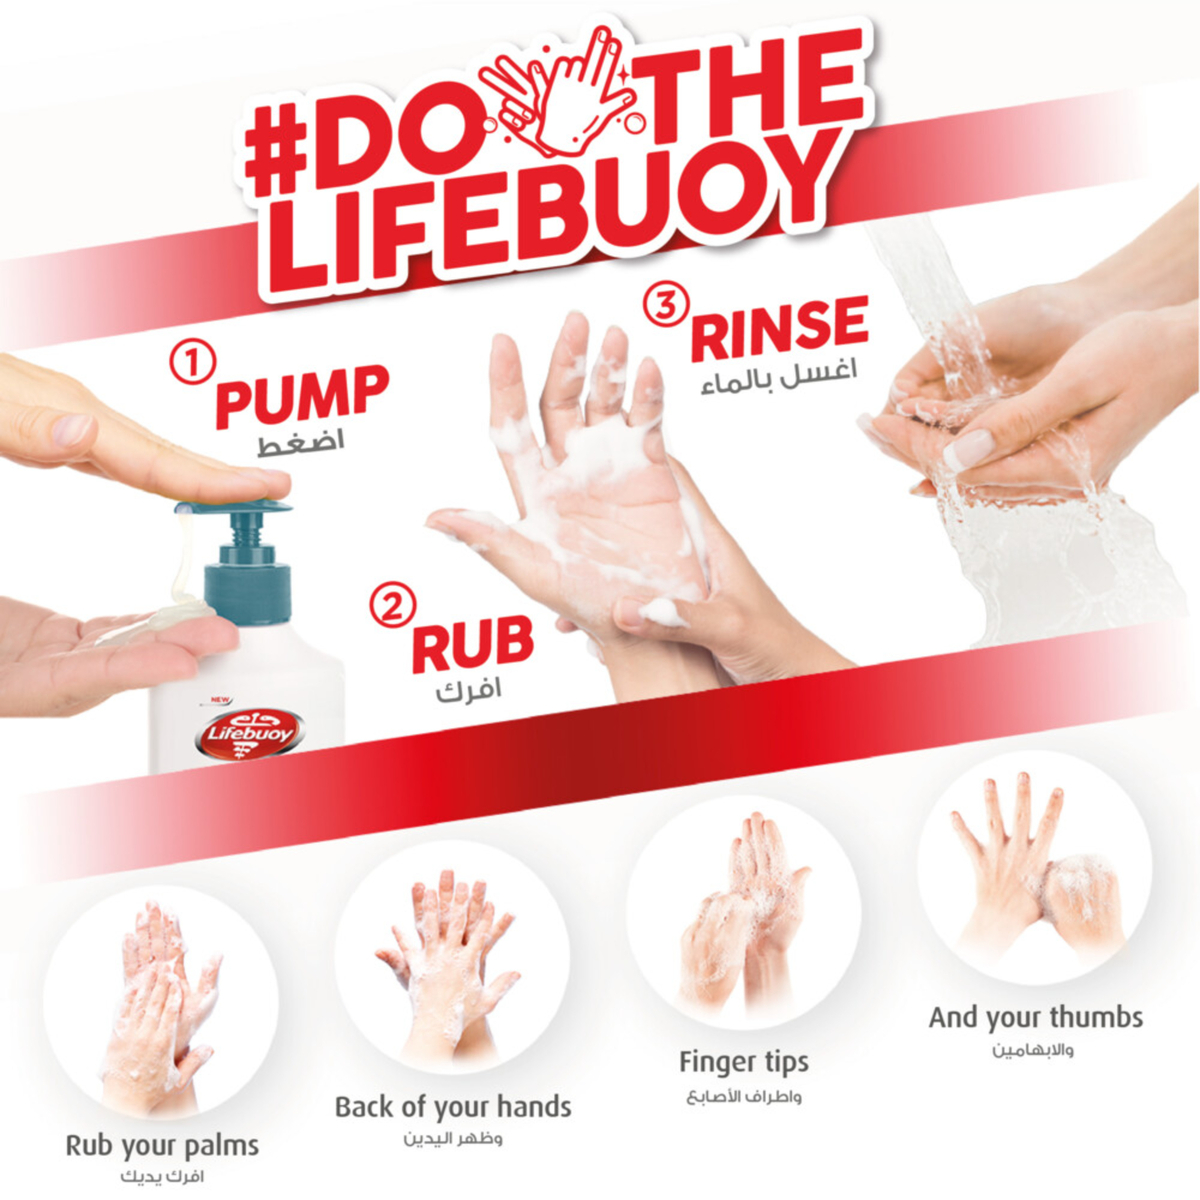 Lifebuoy Antibacterial Sea Minerals And Salt Handwash 200 ml